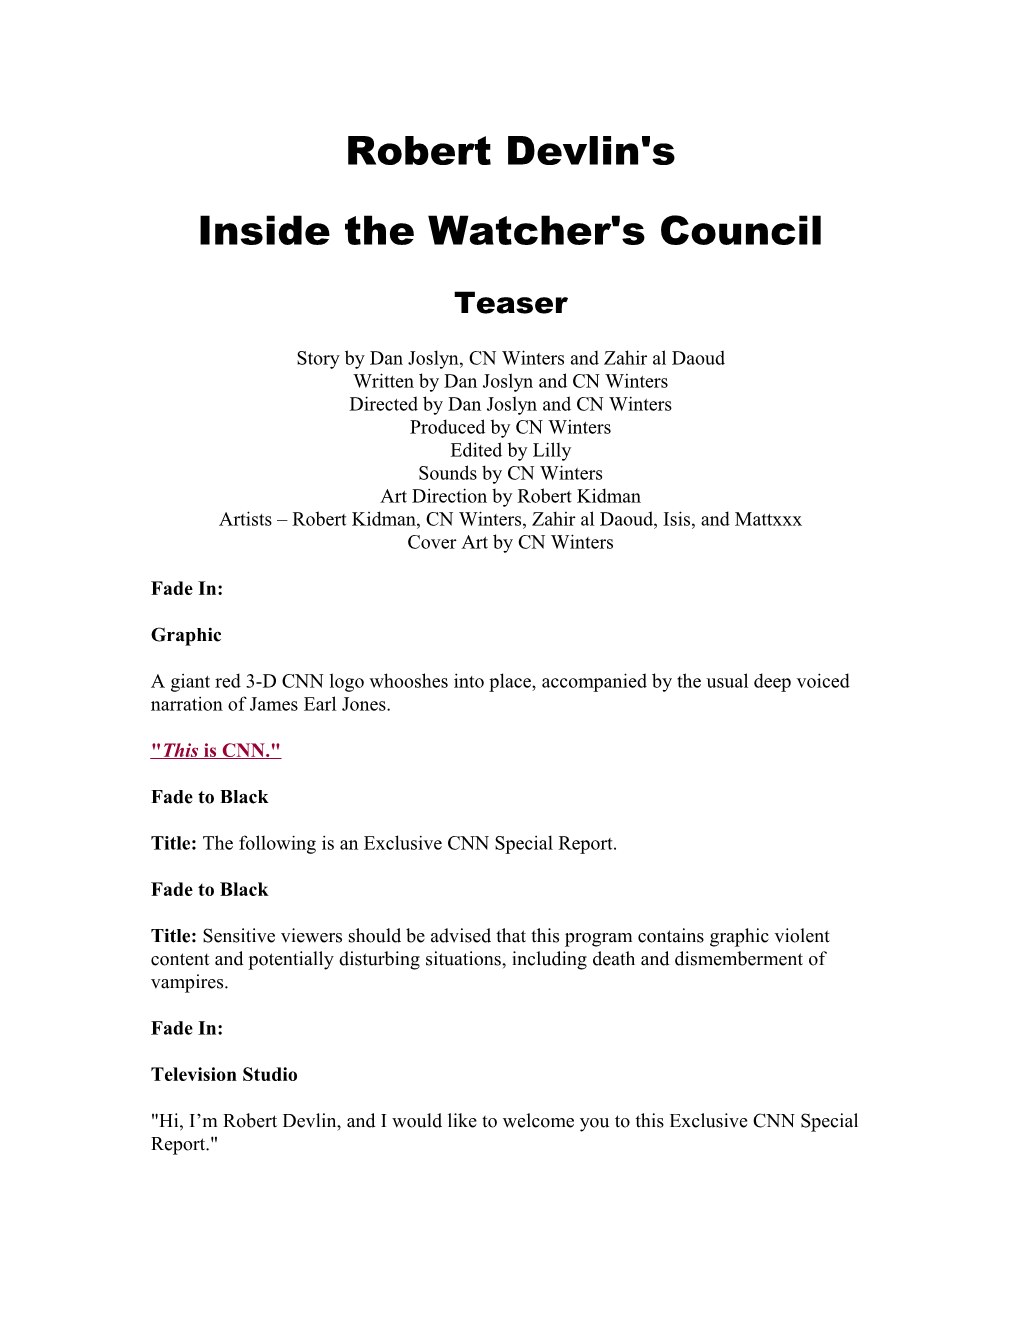 Inside the Watcher's Council